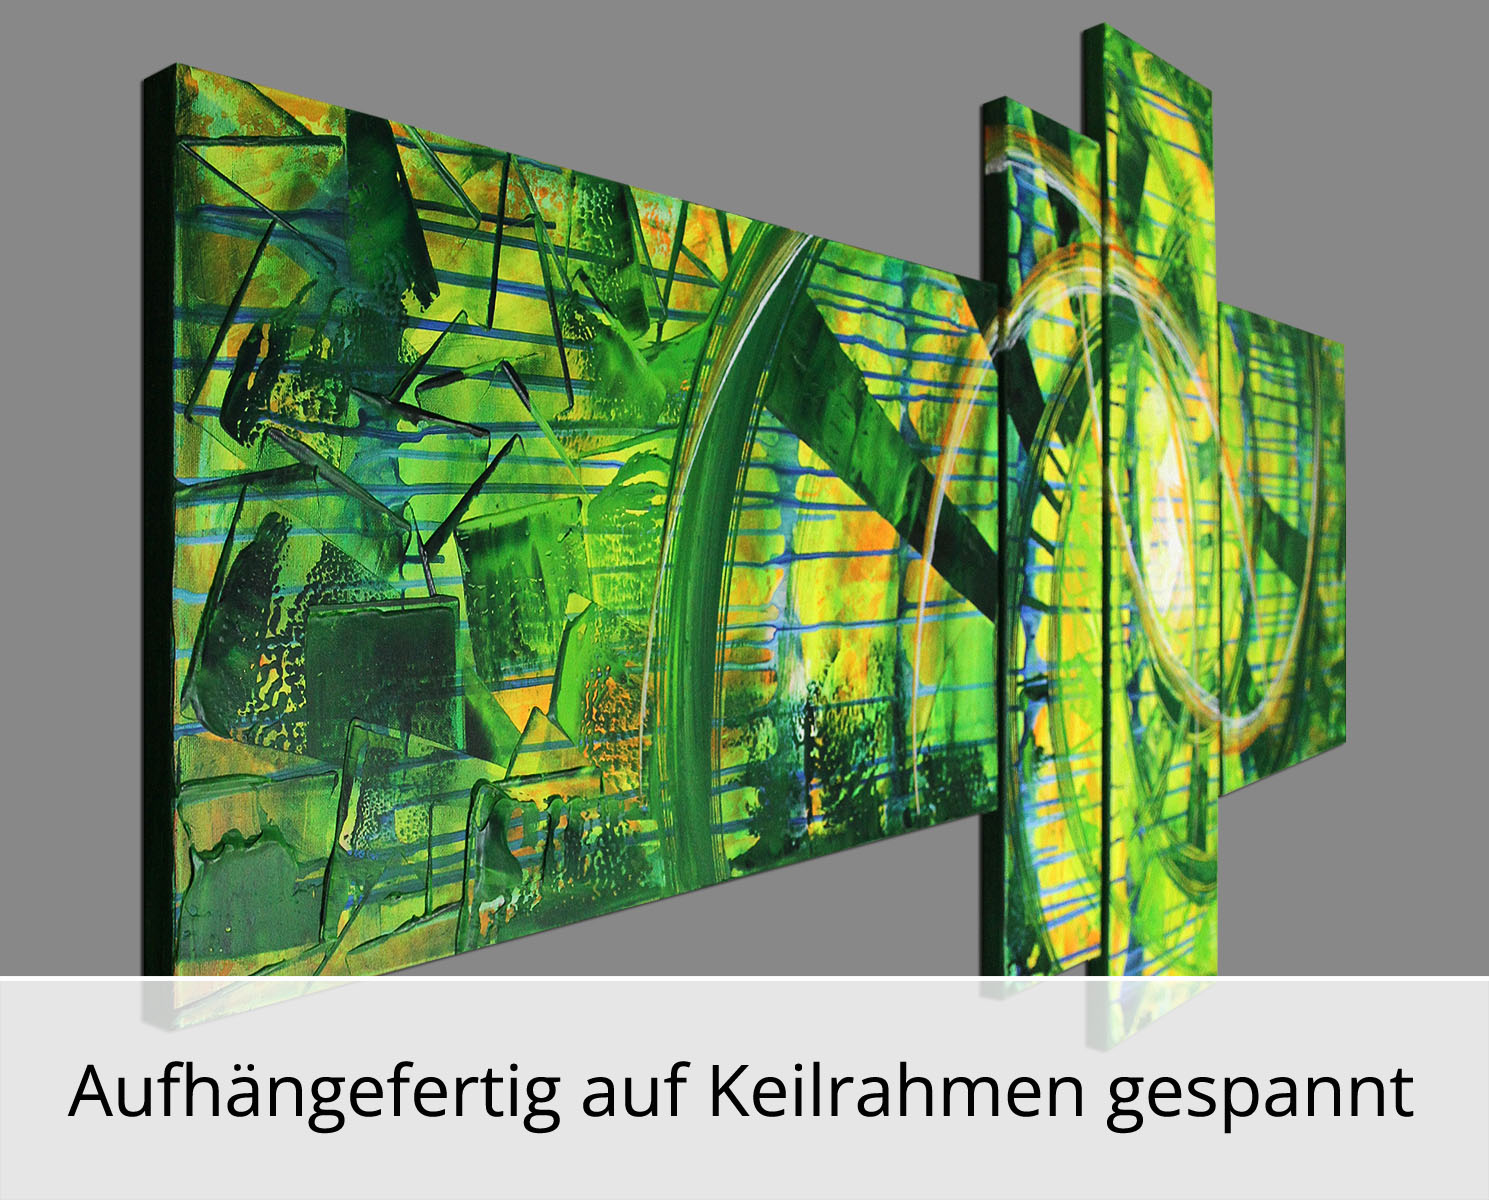 R. König: "Sommervision III", mehrteilige Acrylbilder, Originalgemälde (Unikat) (ri)